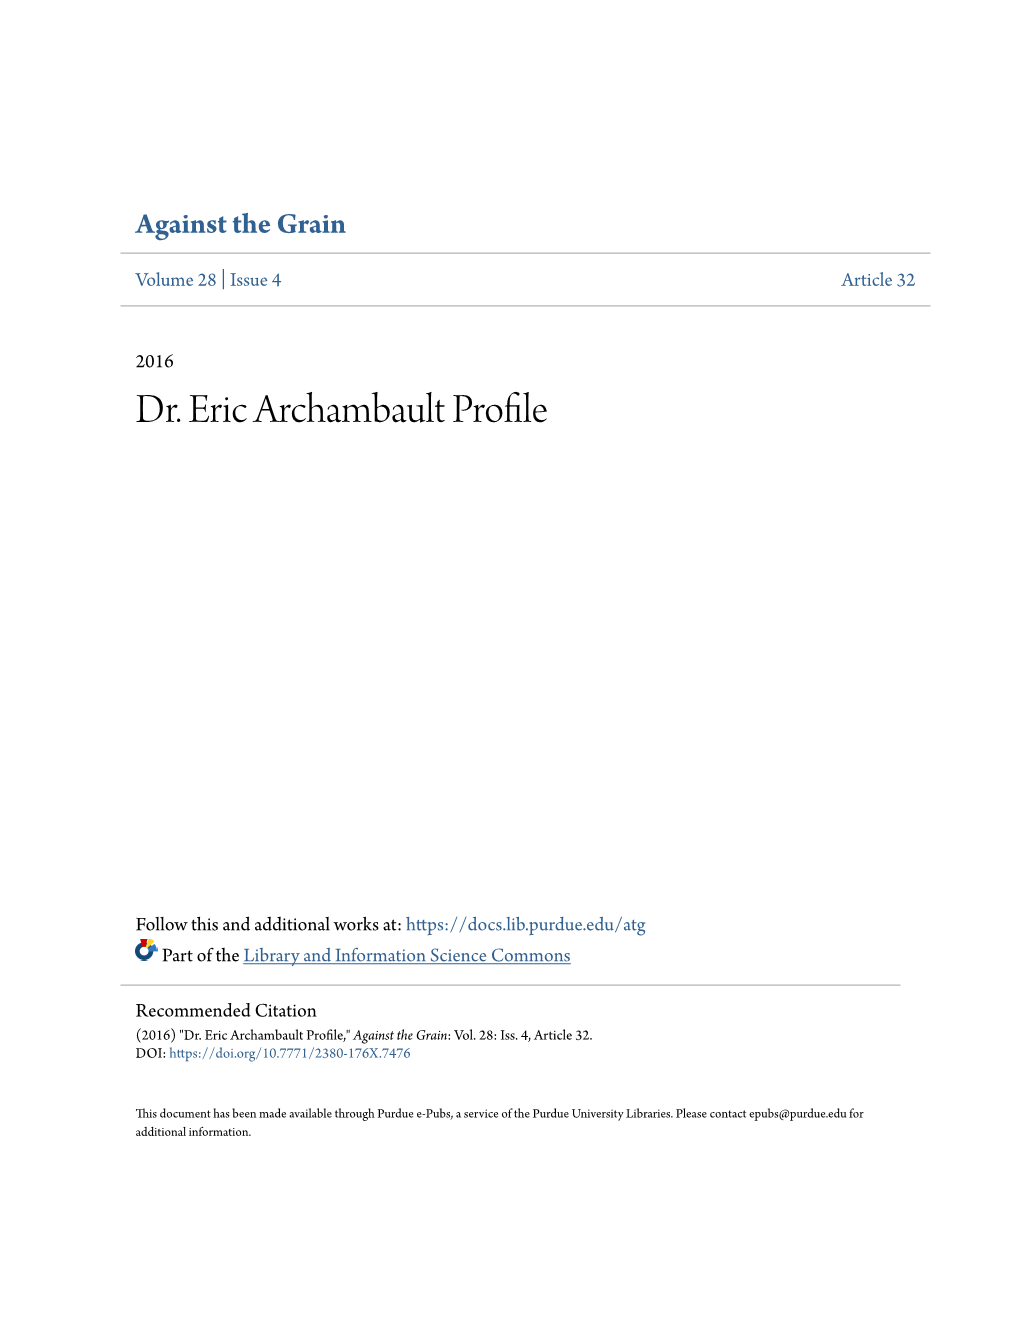 Dr. Eric Archambault Profile